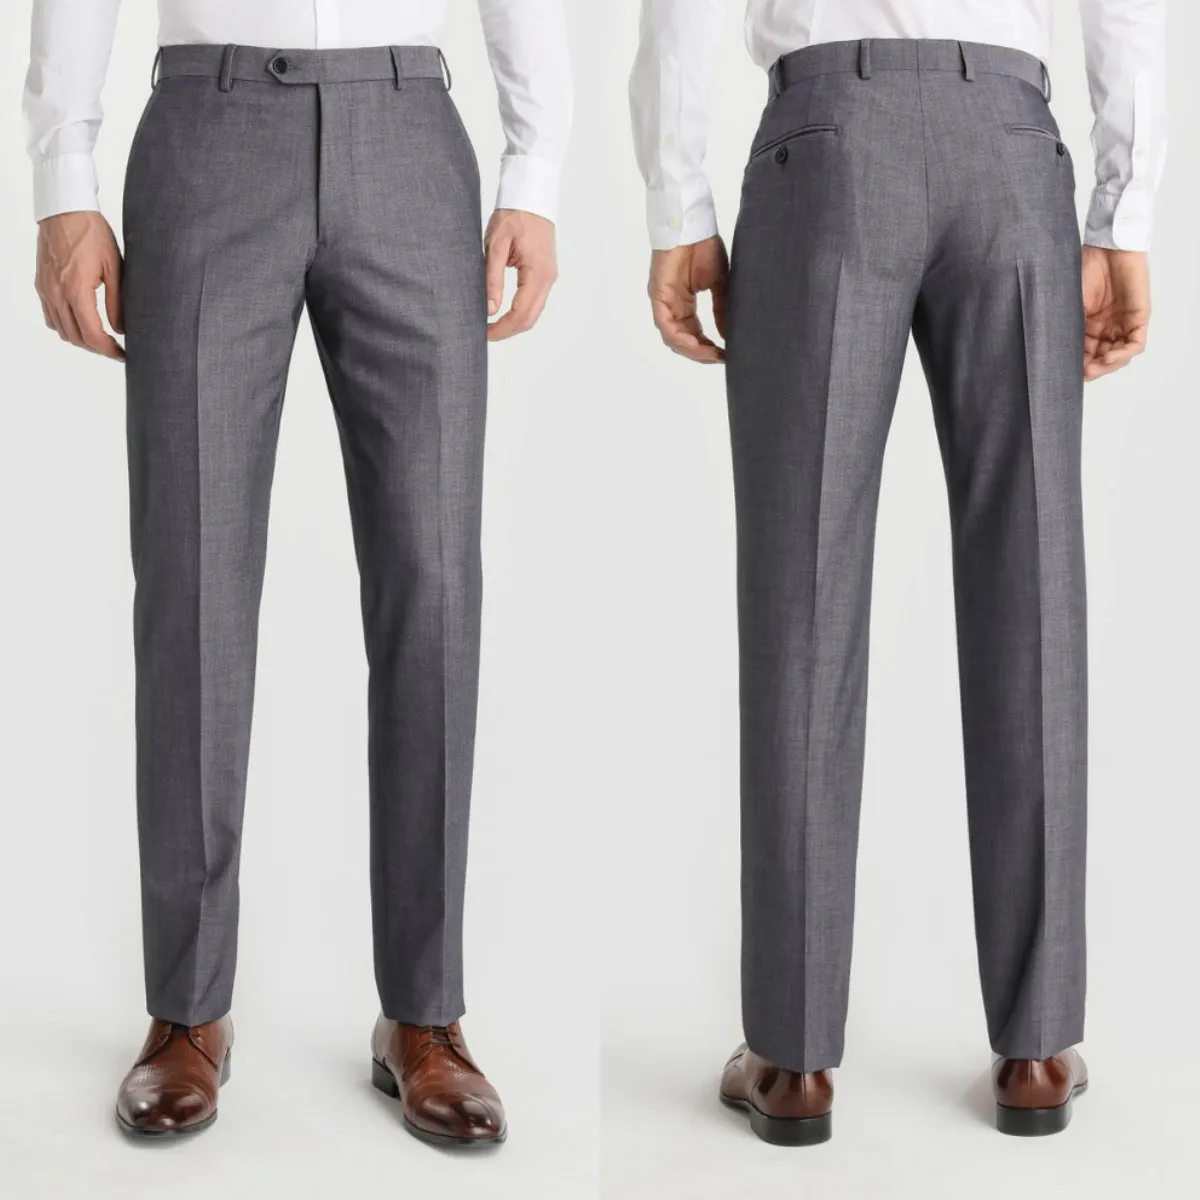 Buy SREY Formal Trouser Pant for Men (Grey) at Amazon.in